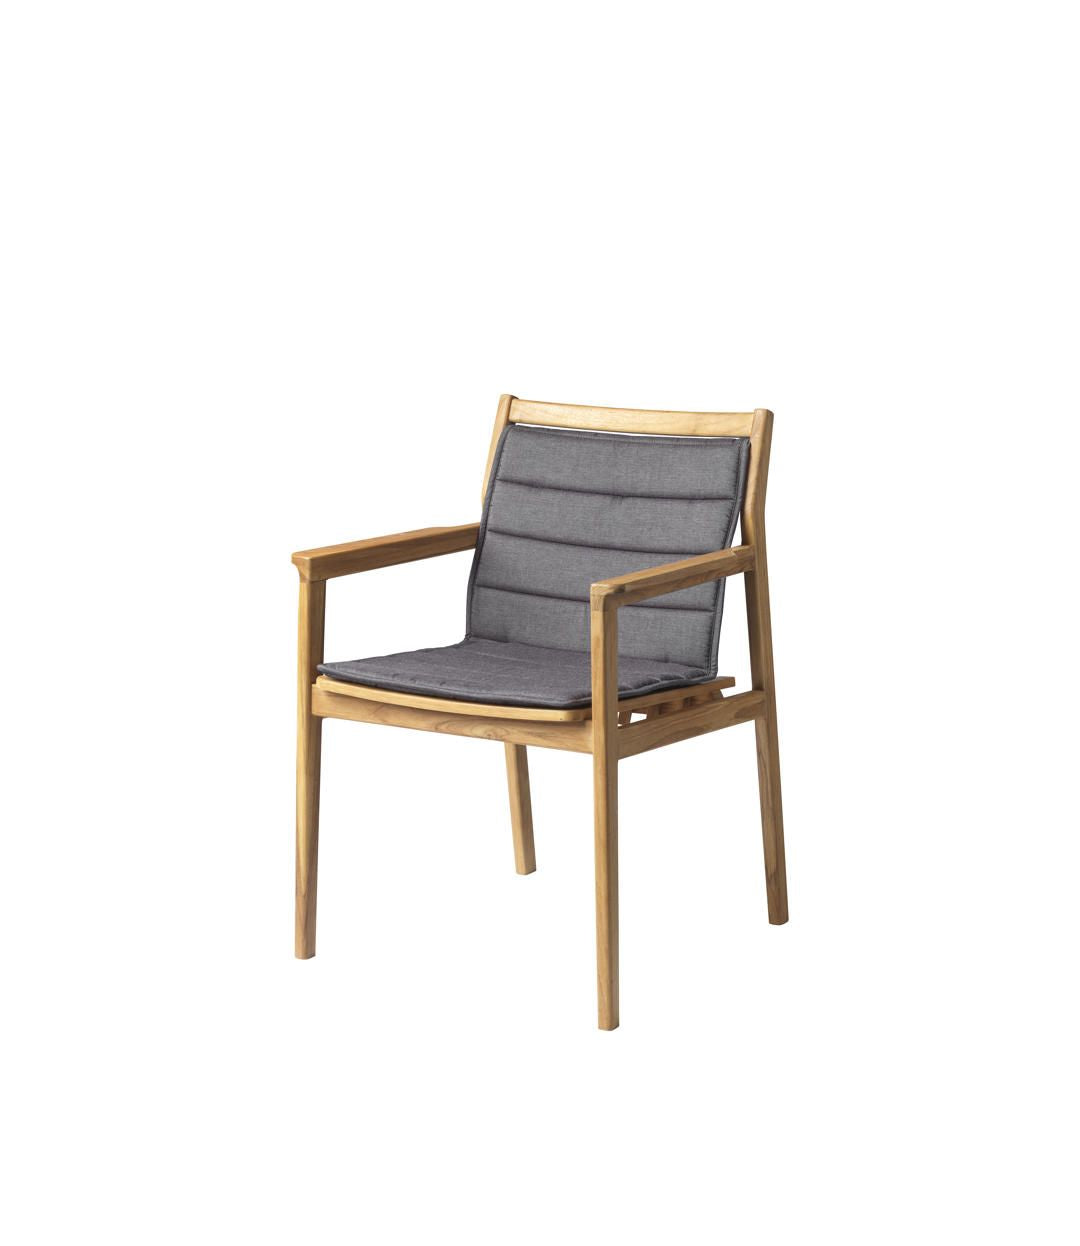 Fdb Møbler M22 Sammen Cushion For M1 Chair, Anthracite Grey